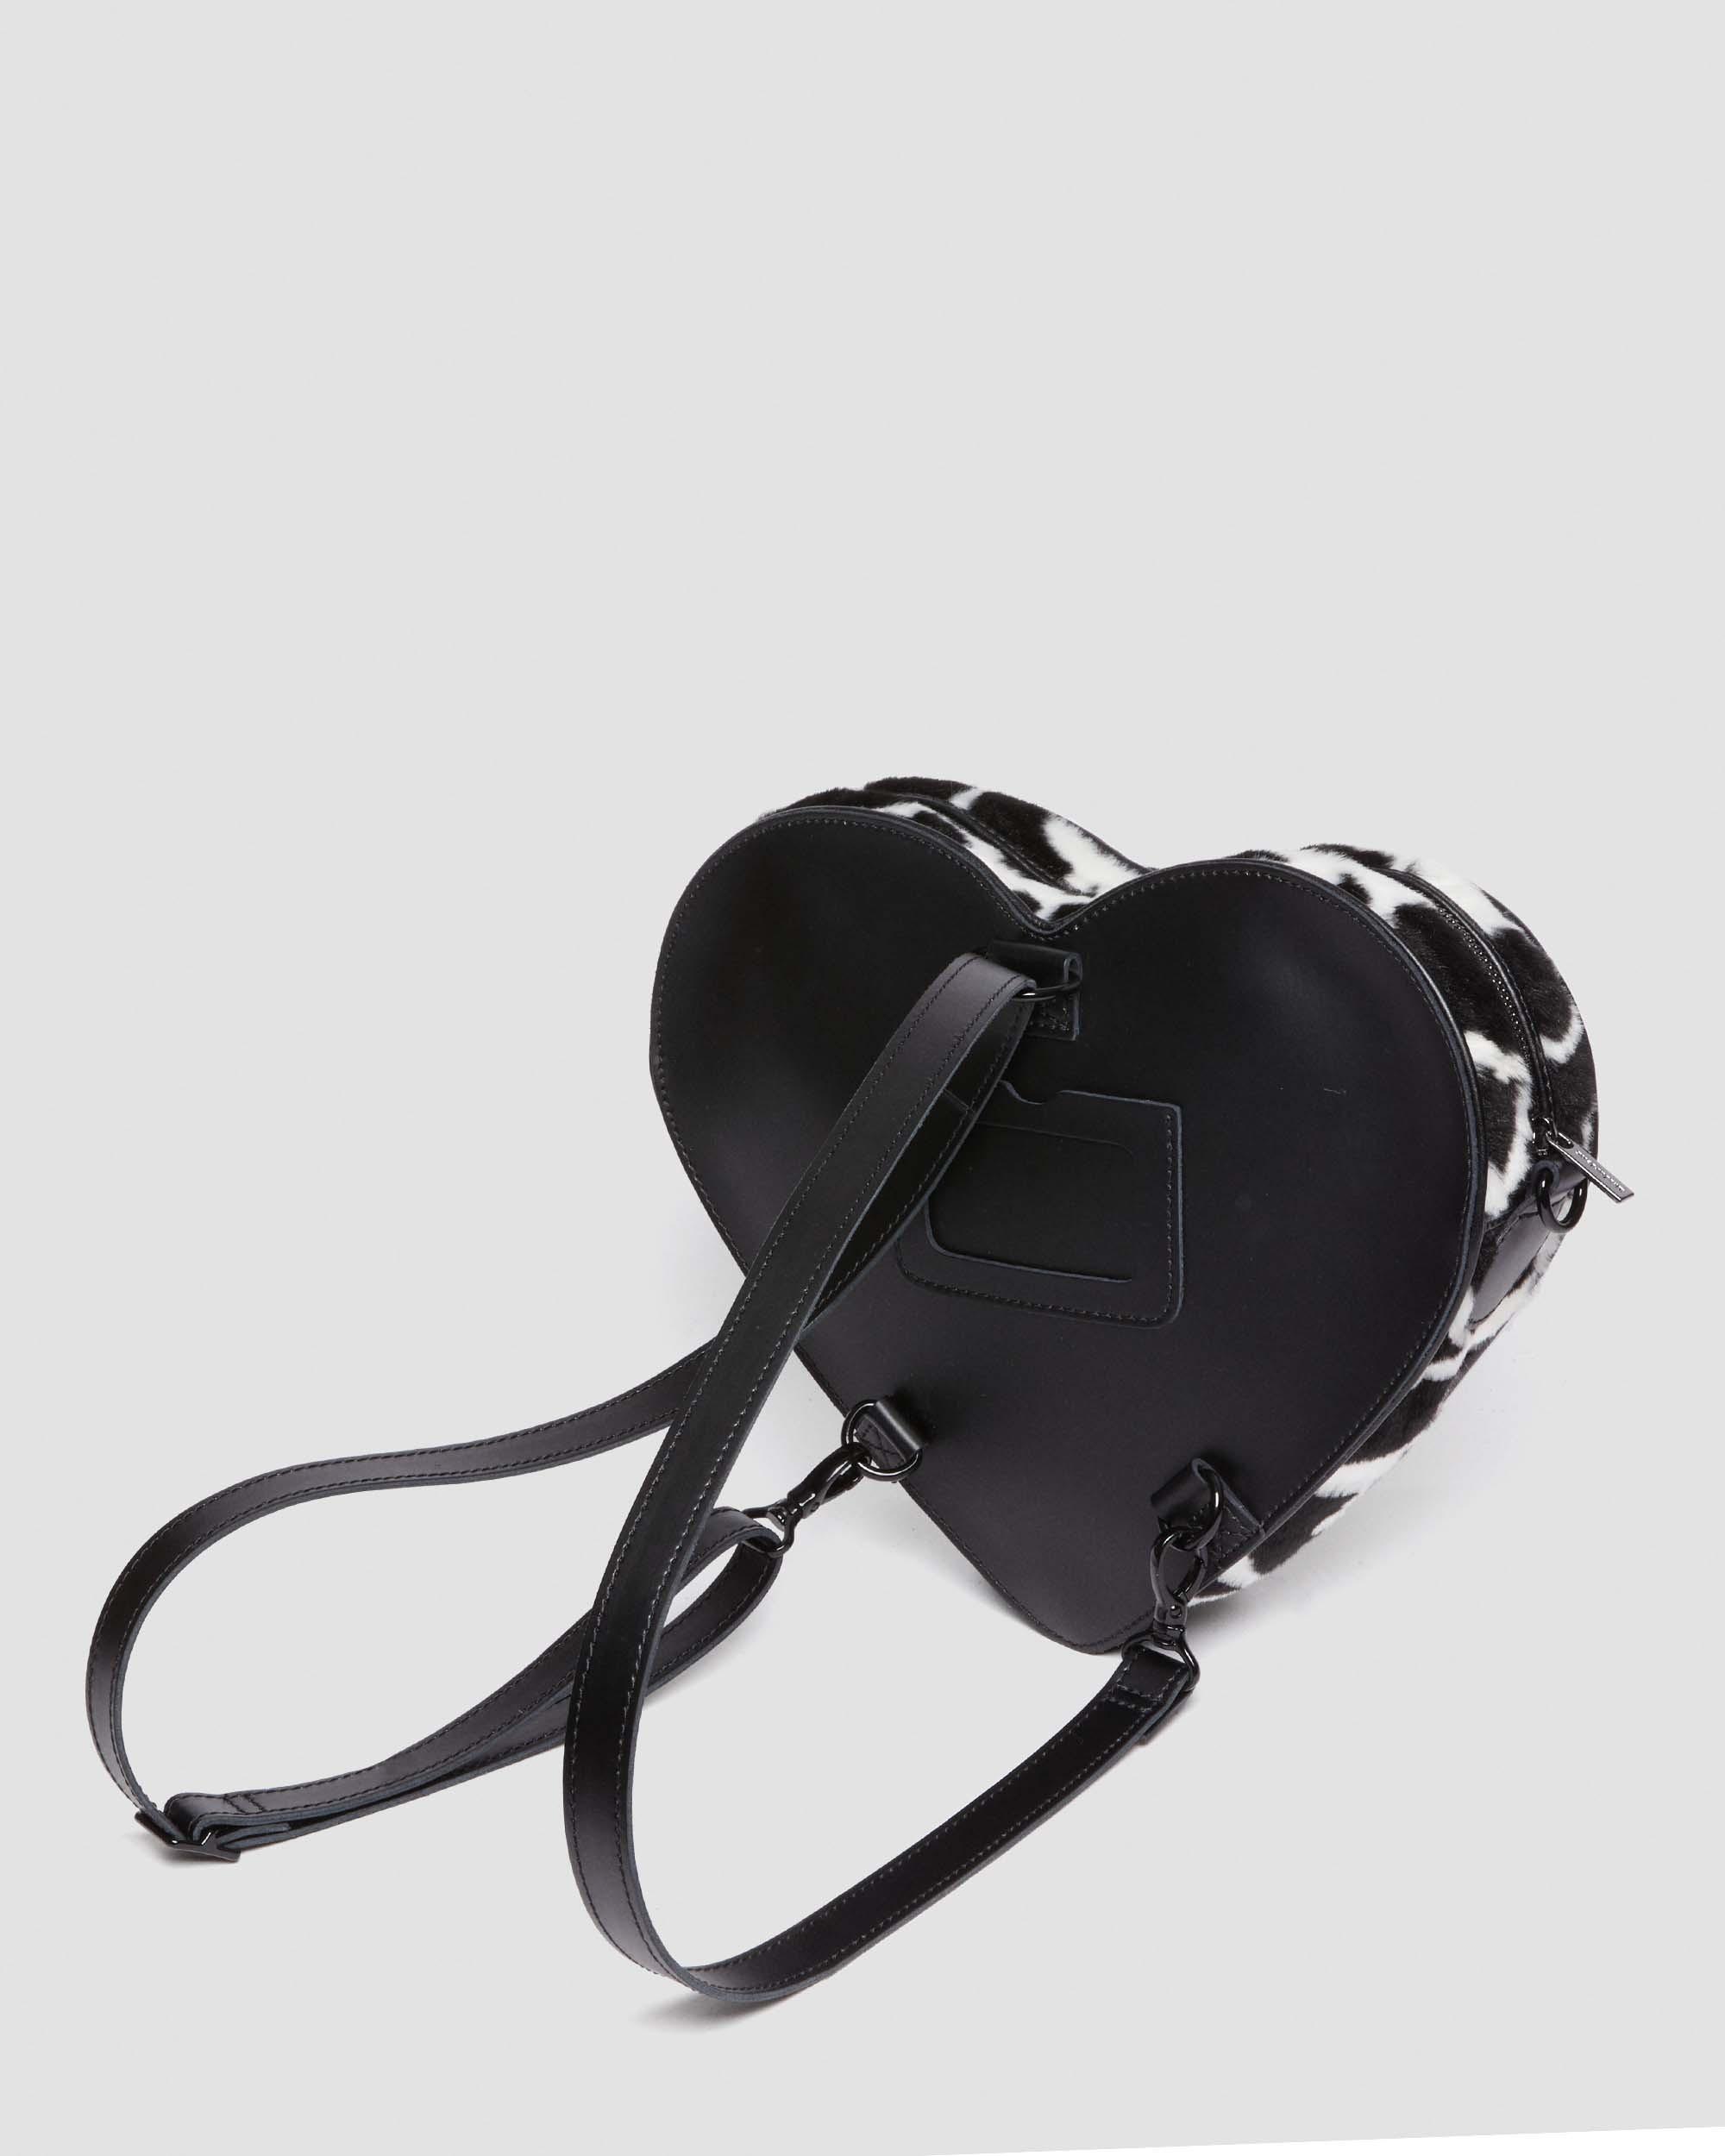 Dr. Martens Leather Heart Shaped Bag in Black